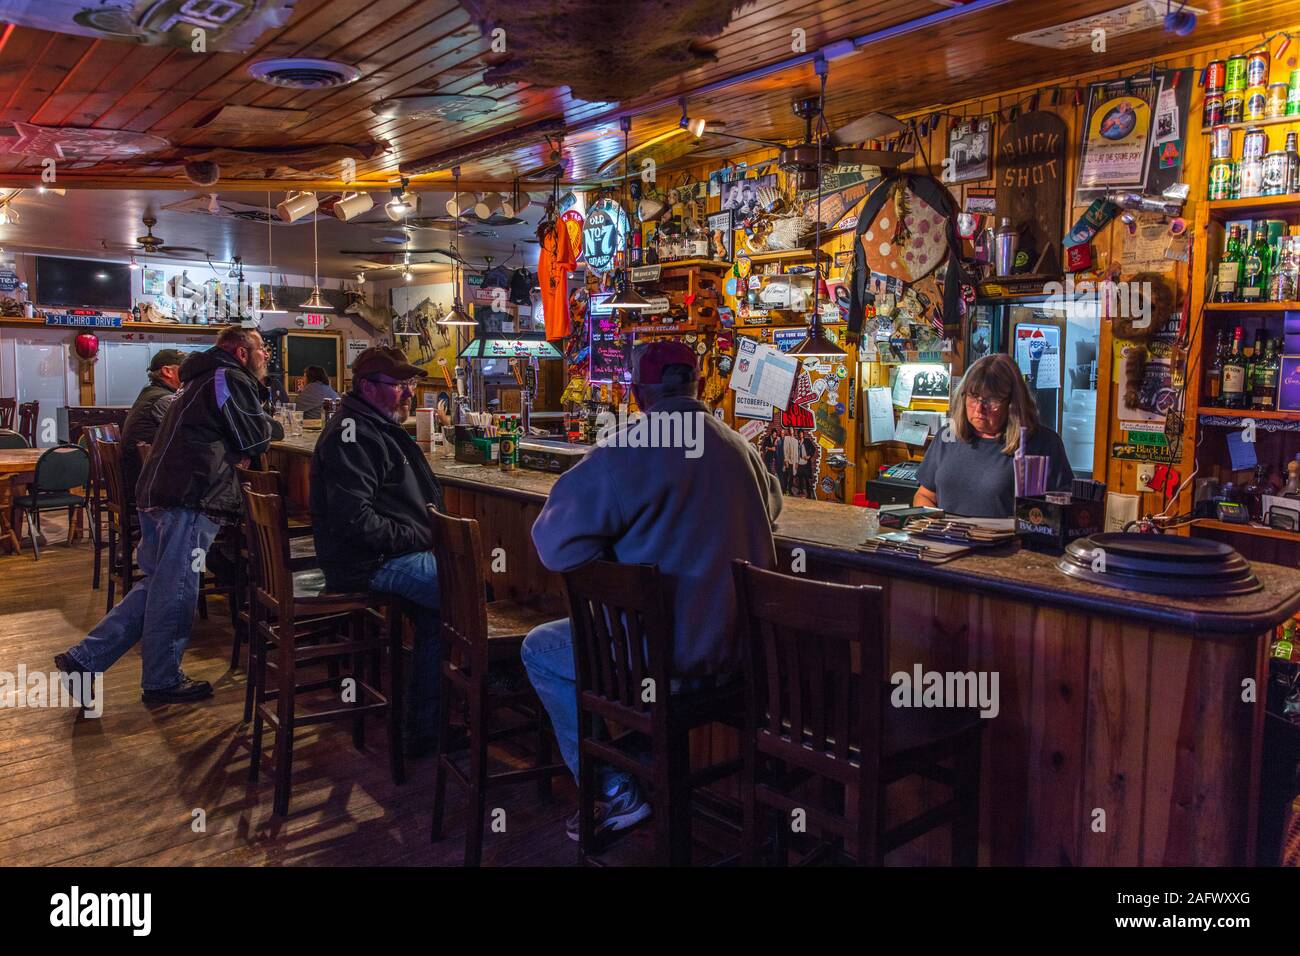 Settembre 28, 2019, Huellet Wyoming, STATI UNITI D'AMERICA - Old saloon bar in Huellet Wyoming Foto Stock